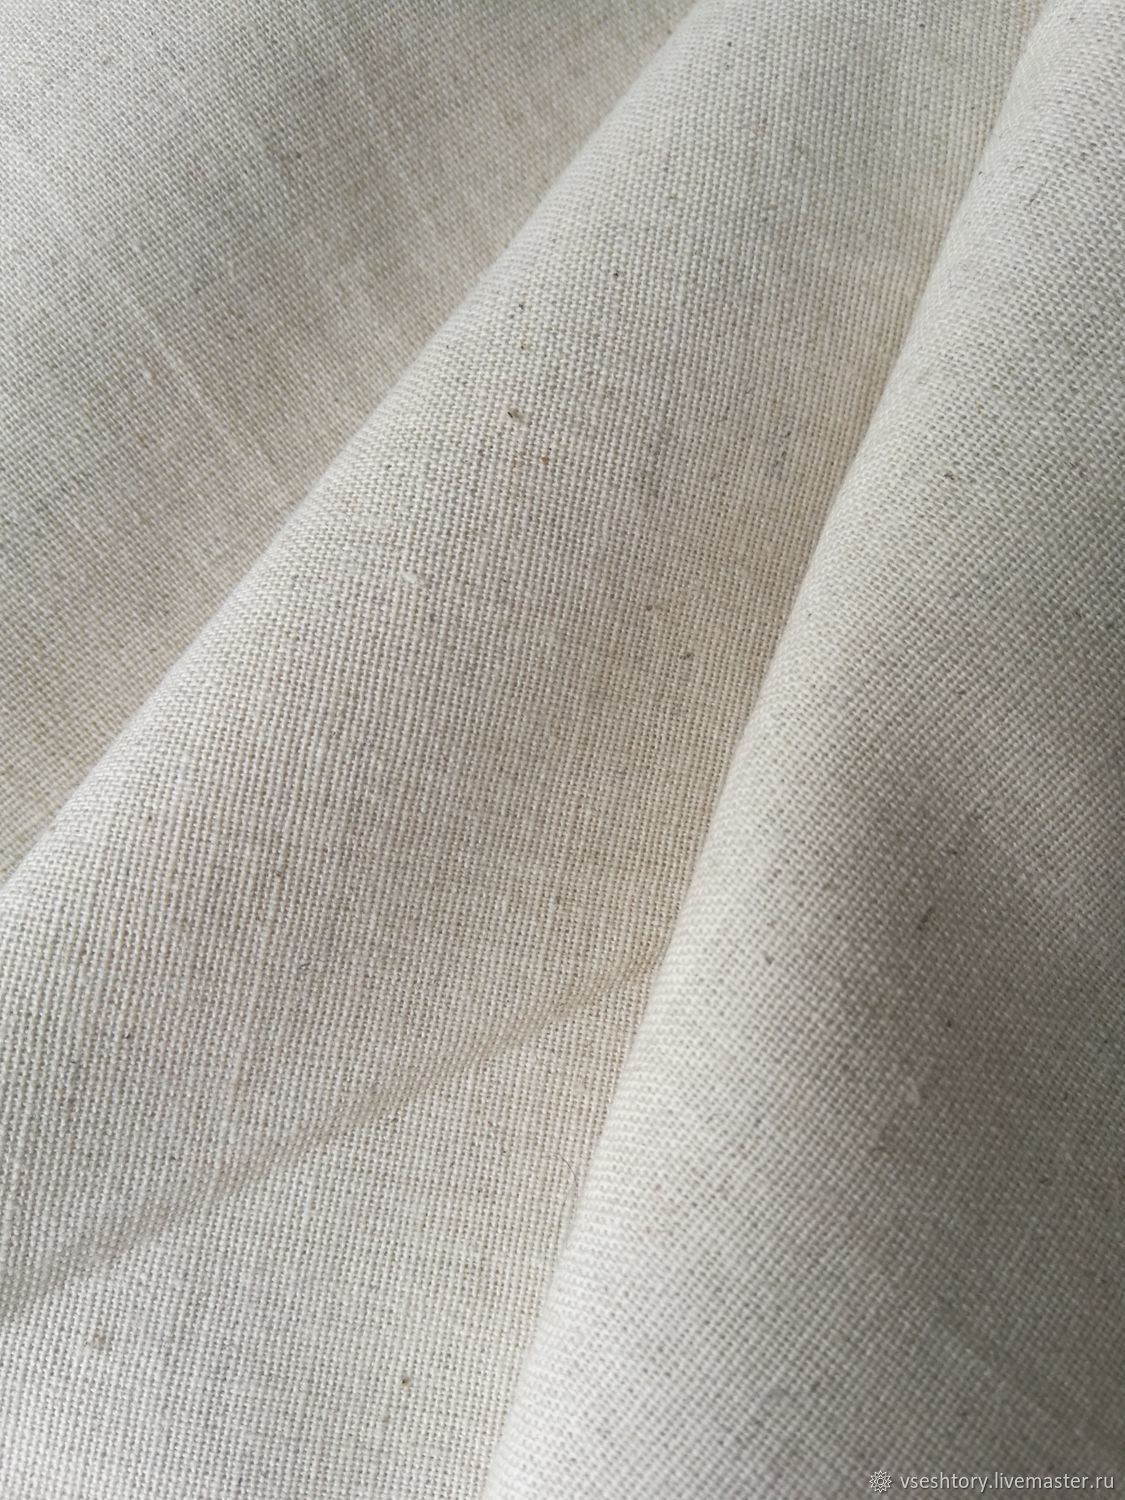 Х б лен. Ткань Apollo Linen. Cotton Linen (4362/Изюм). Lima Linen ткань Аскона. Льняная ткань.